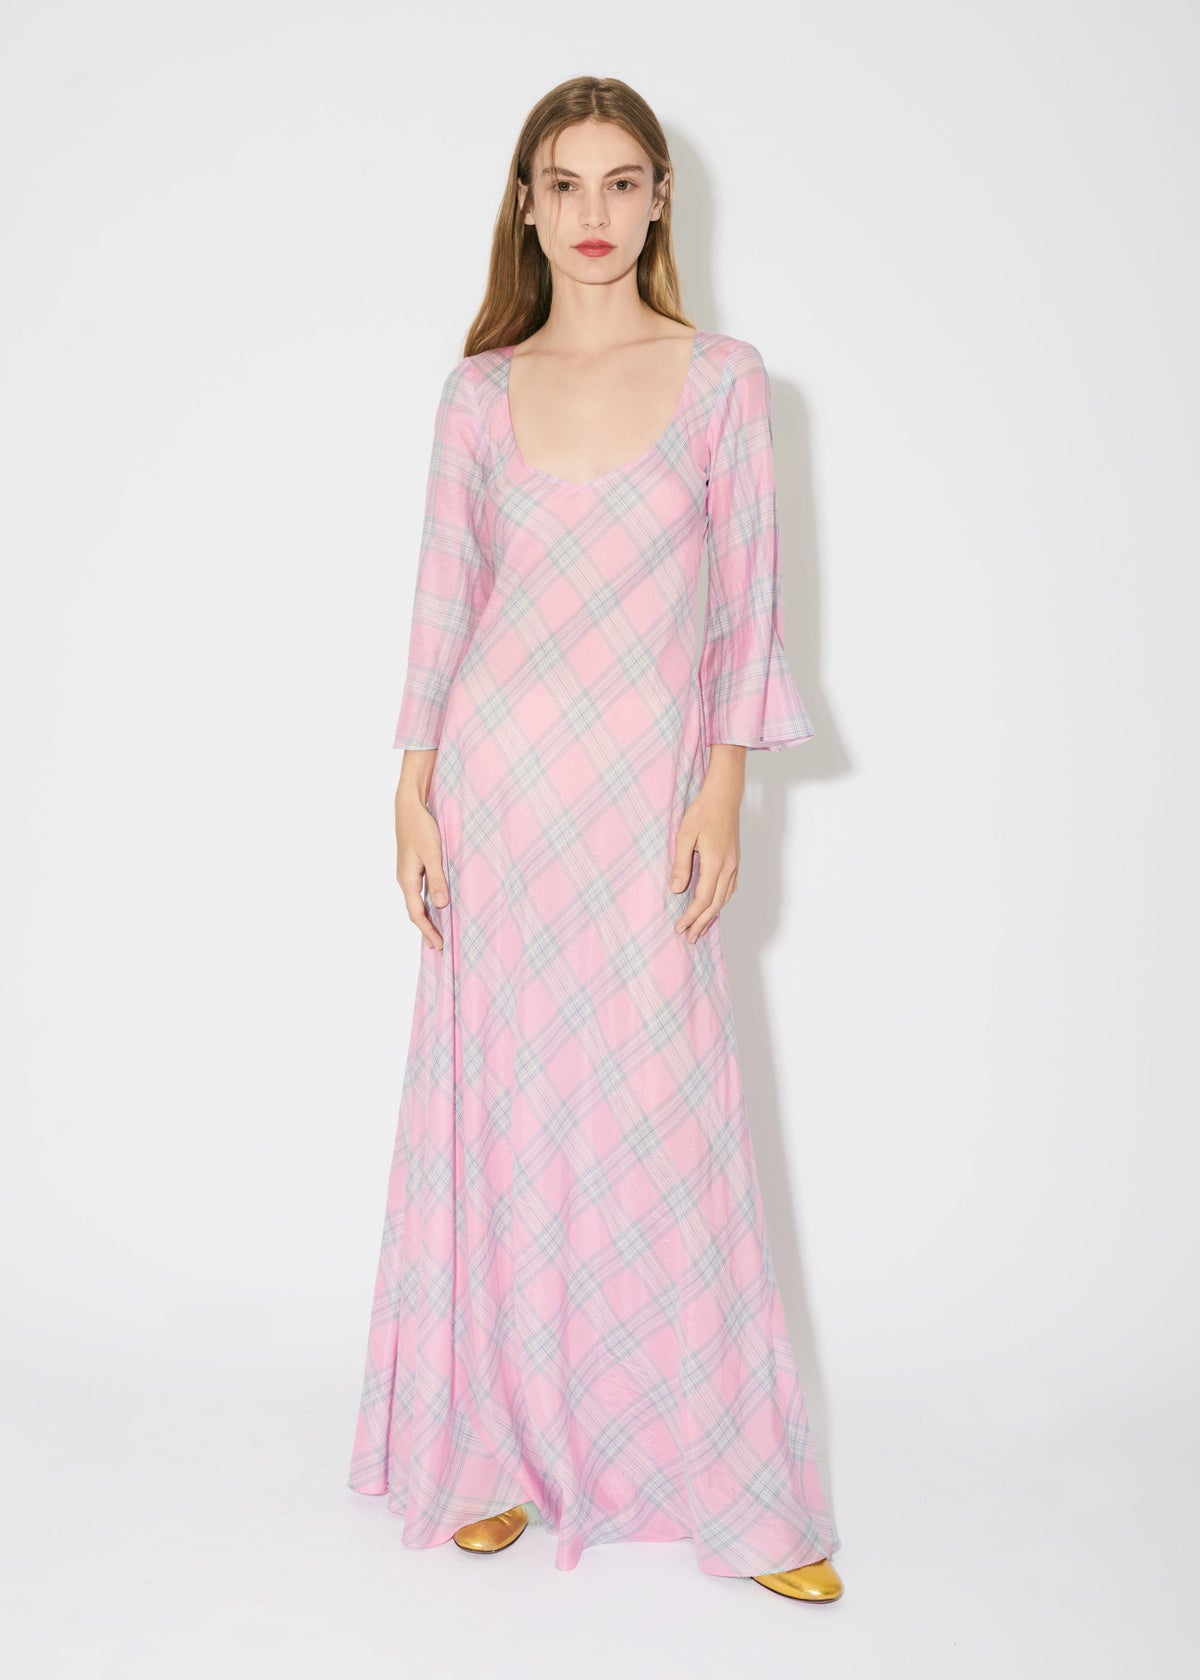 JaneBooke Pink Plaid Cotton Voile Dress